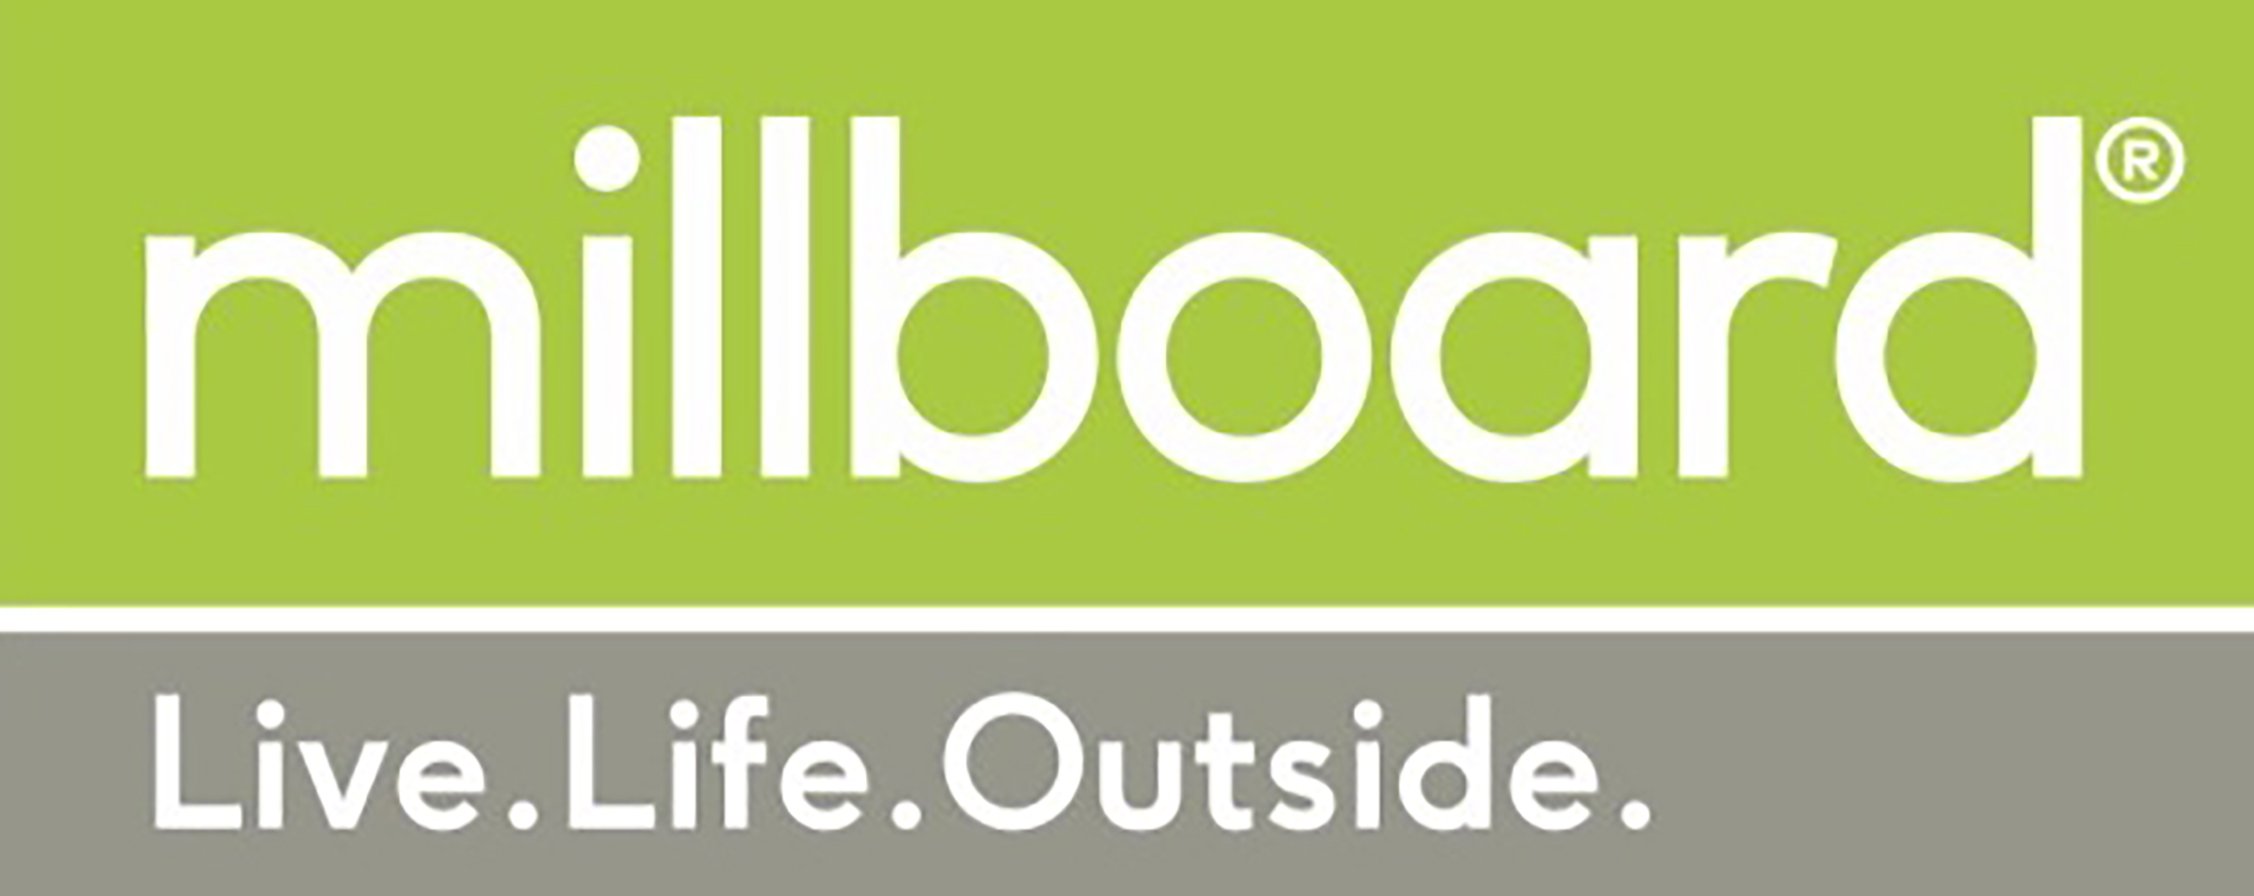 Millboard-Logo-300dpi